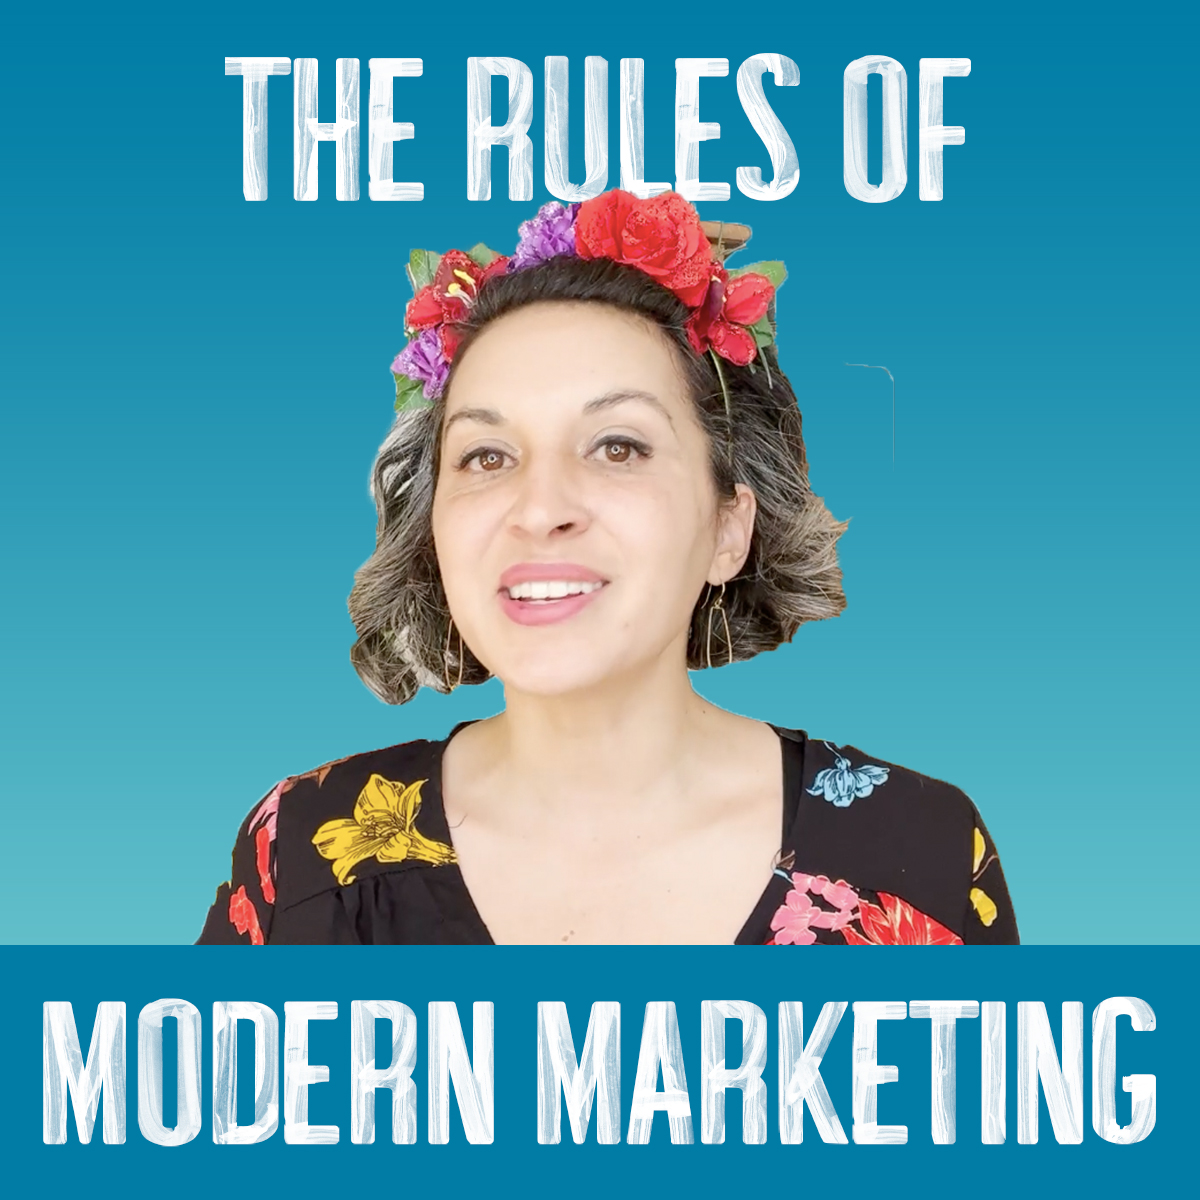 digital_marketing_the_rules_of_modern_marketing